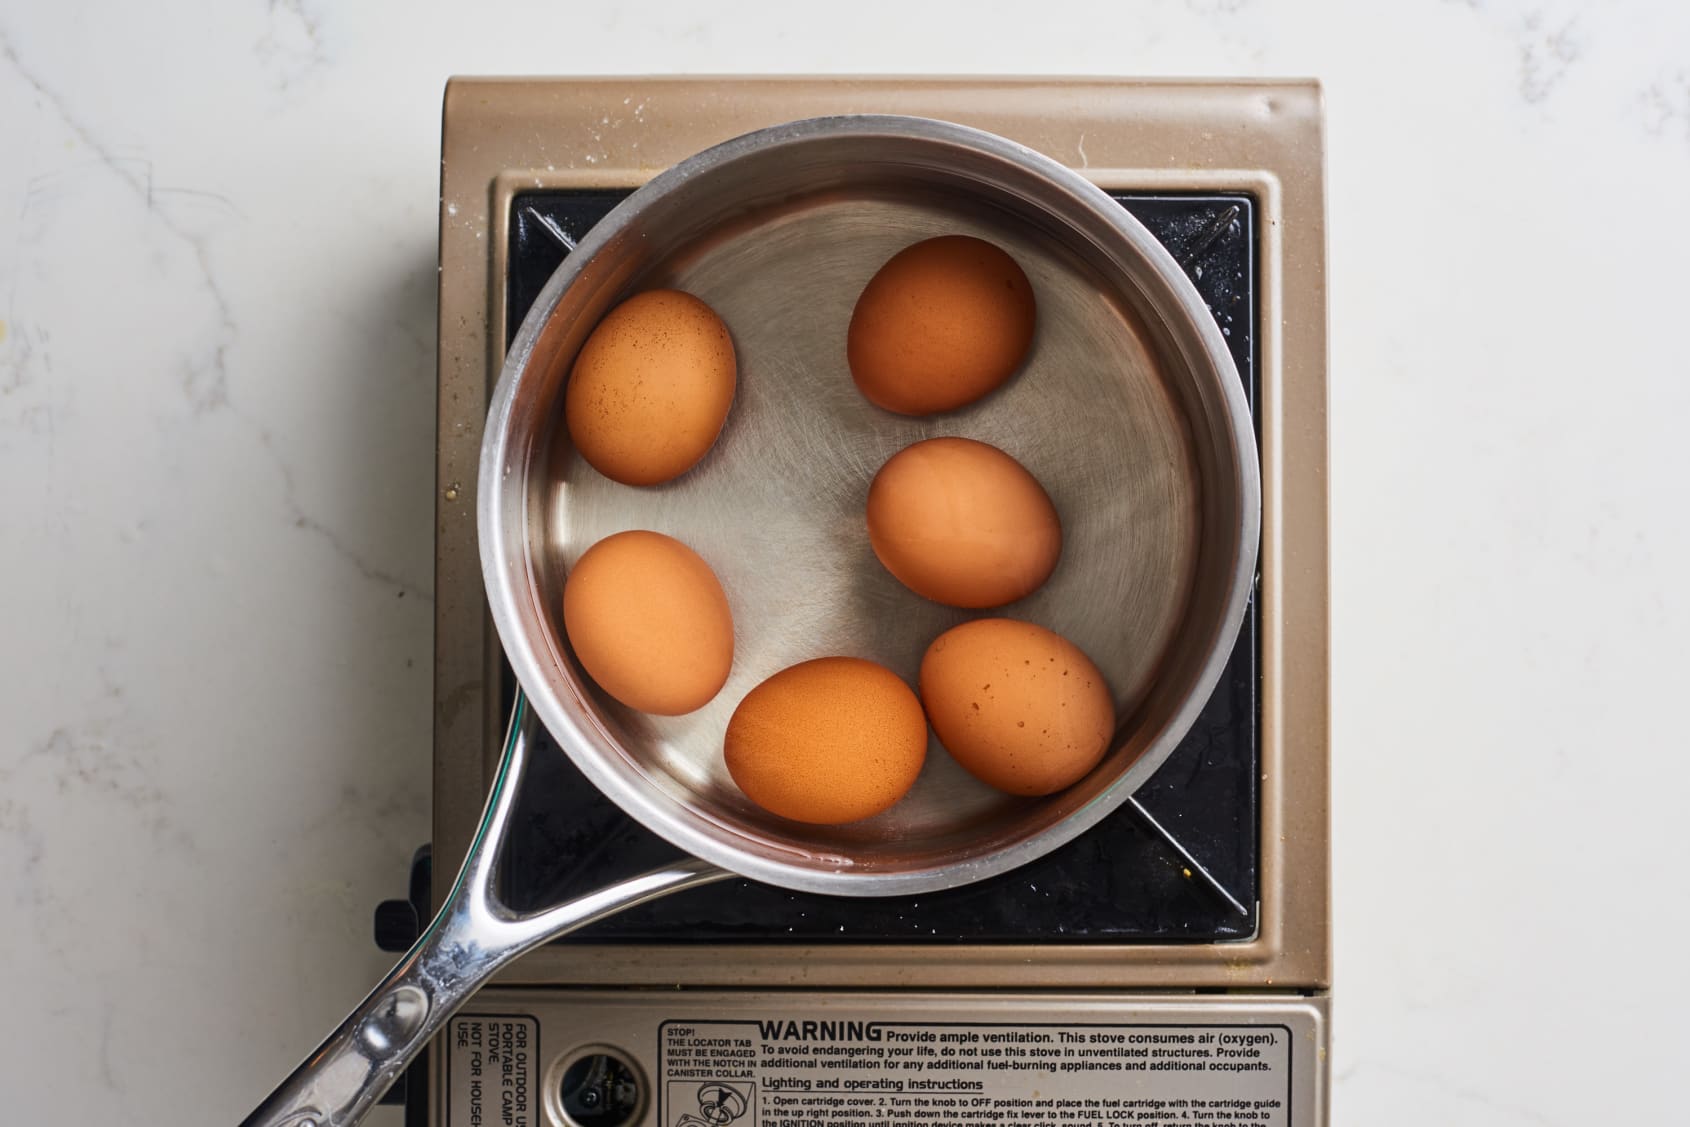 Stainless Steel Mini Frying Pan Household Hot Oil Pan Boiled Eggs